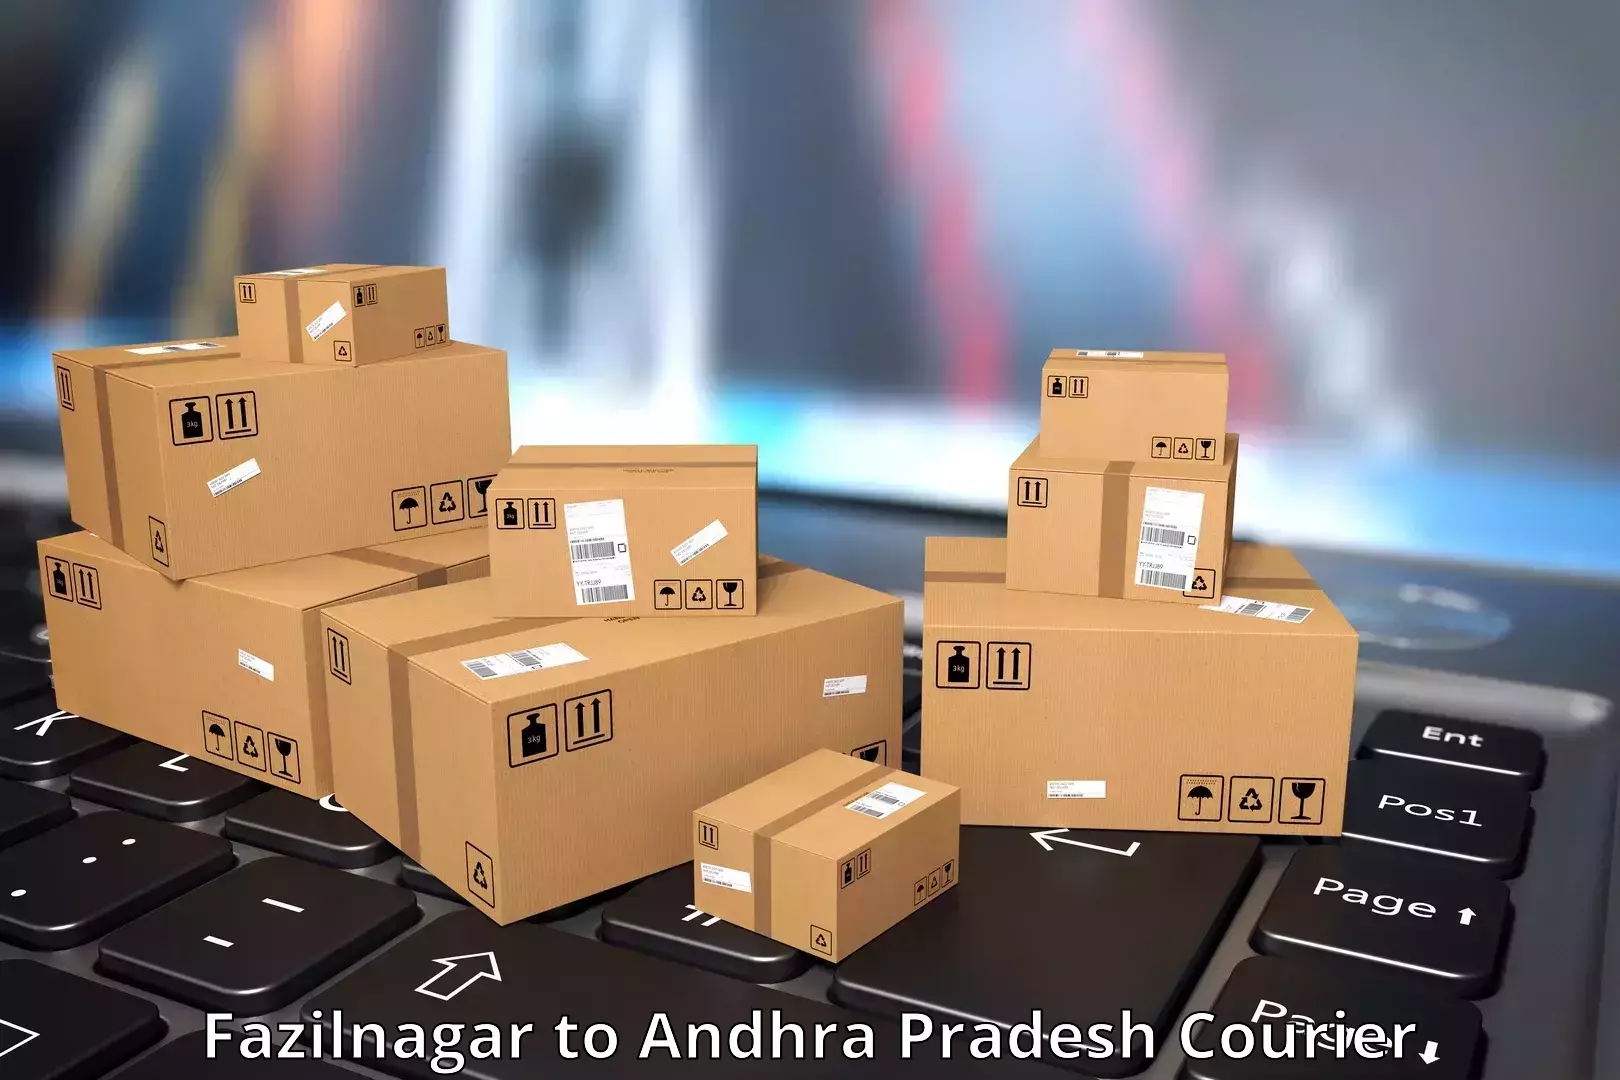 Courier service efficiency in Fazilnagar to Puttur Tirupati